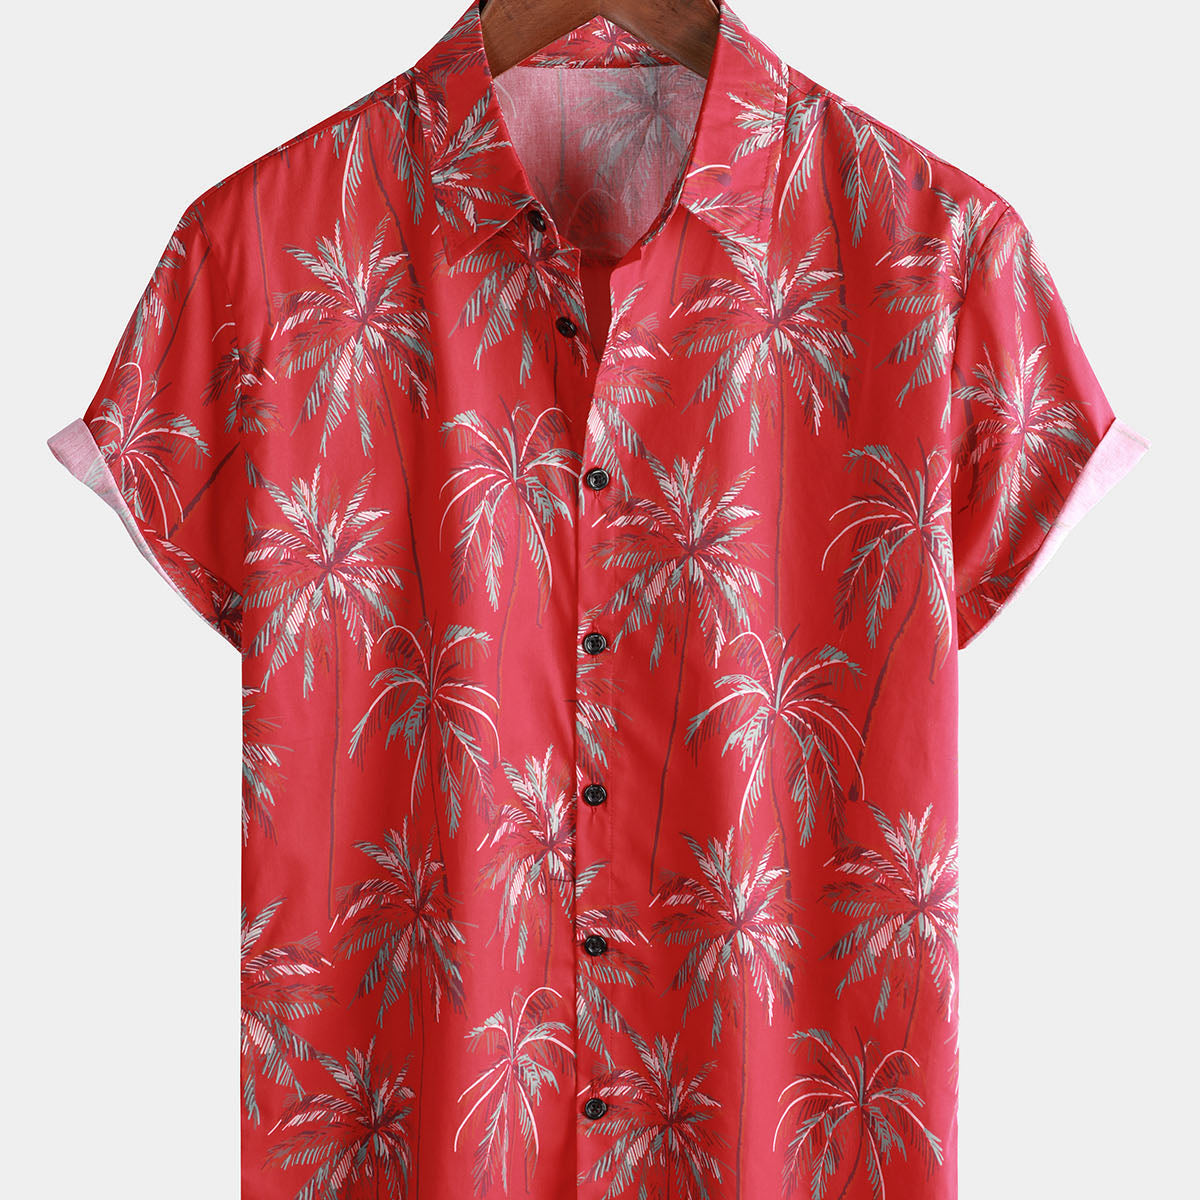 Men's Cotton Red Hawaiian Tropical Palm Casual Beach Summer Plant Vacation Short Sleeve Shirt